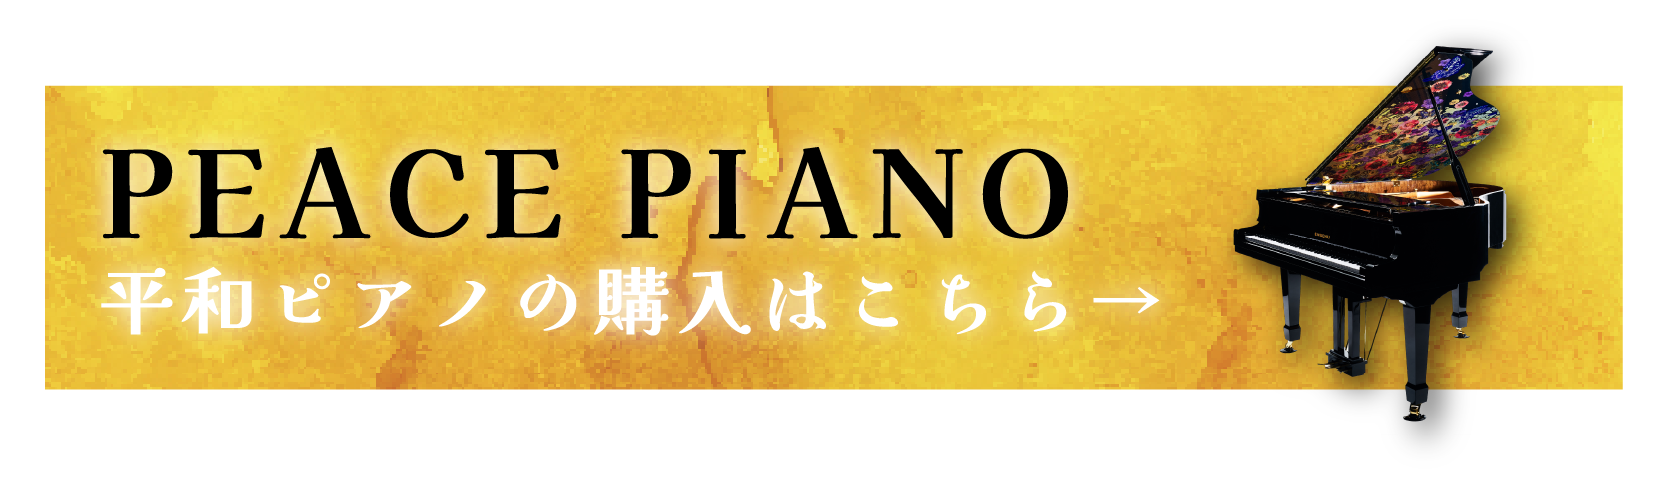 peace piano